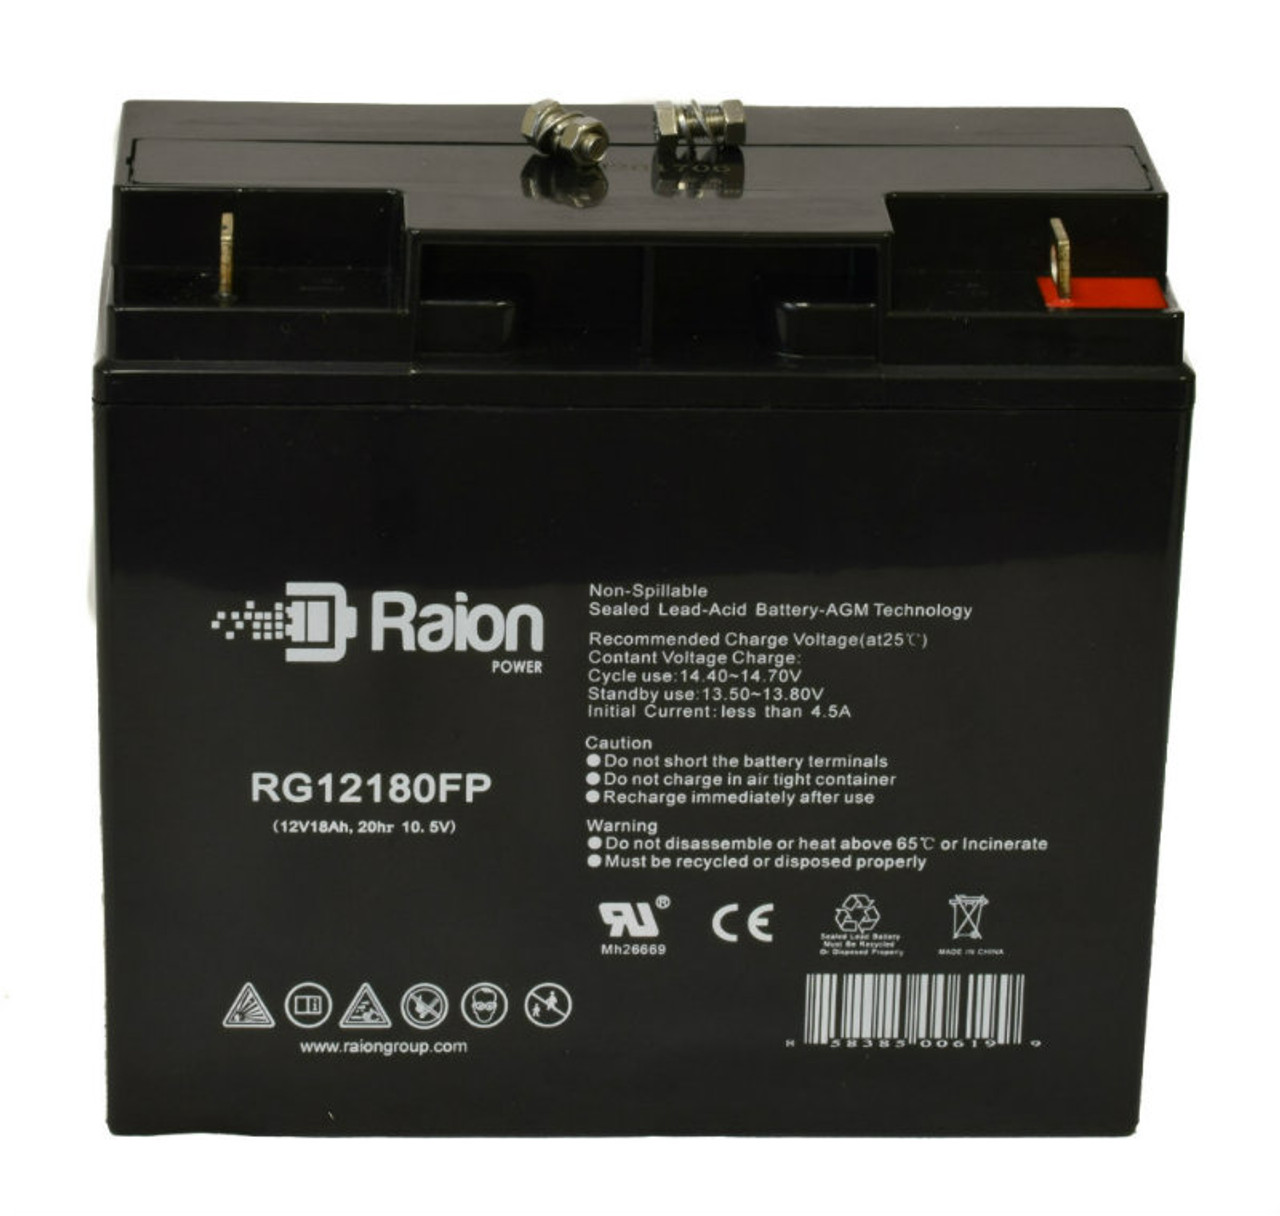 Raion Power RG12180FP 12V 18Ah Lead Acid Battery for Volt Canada Xplorer Mobility